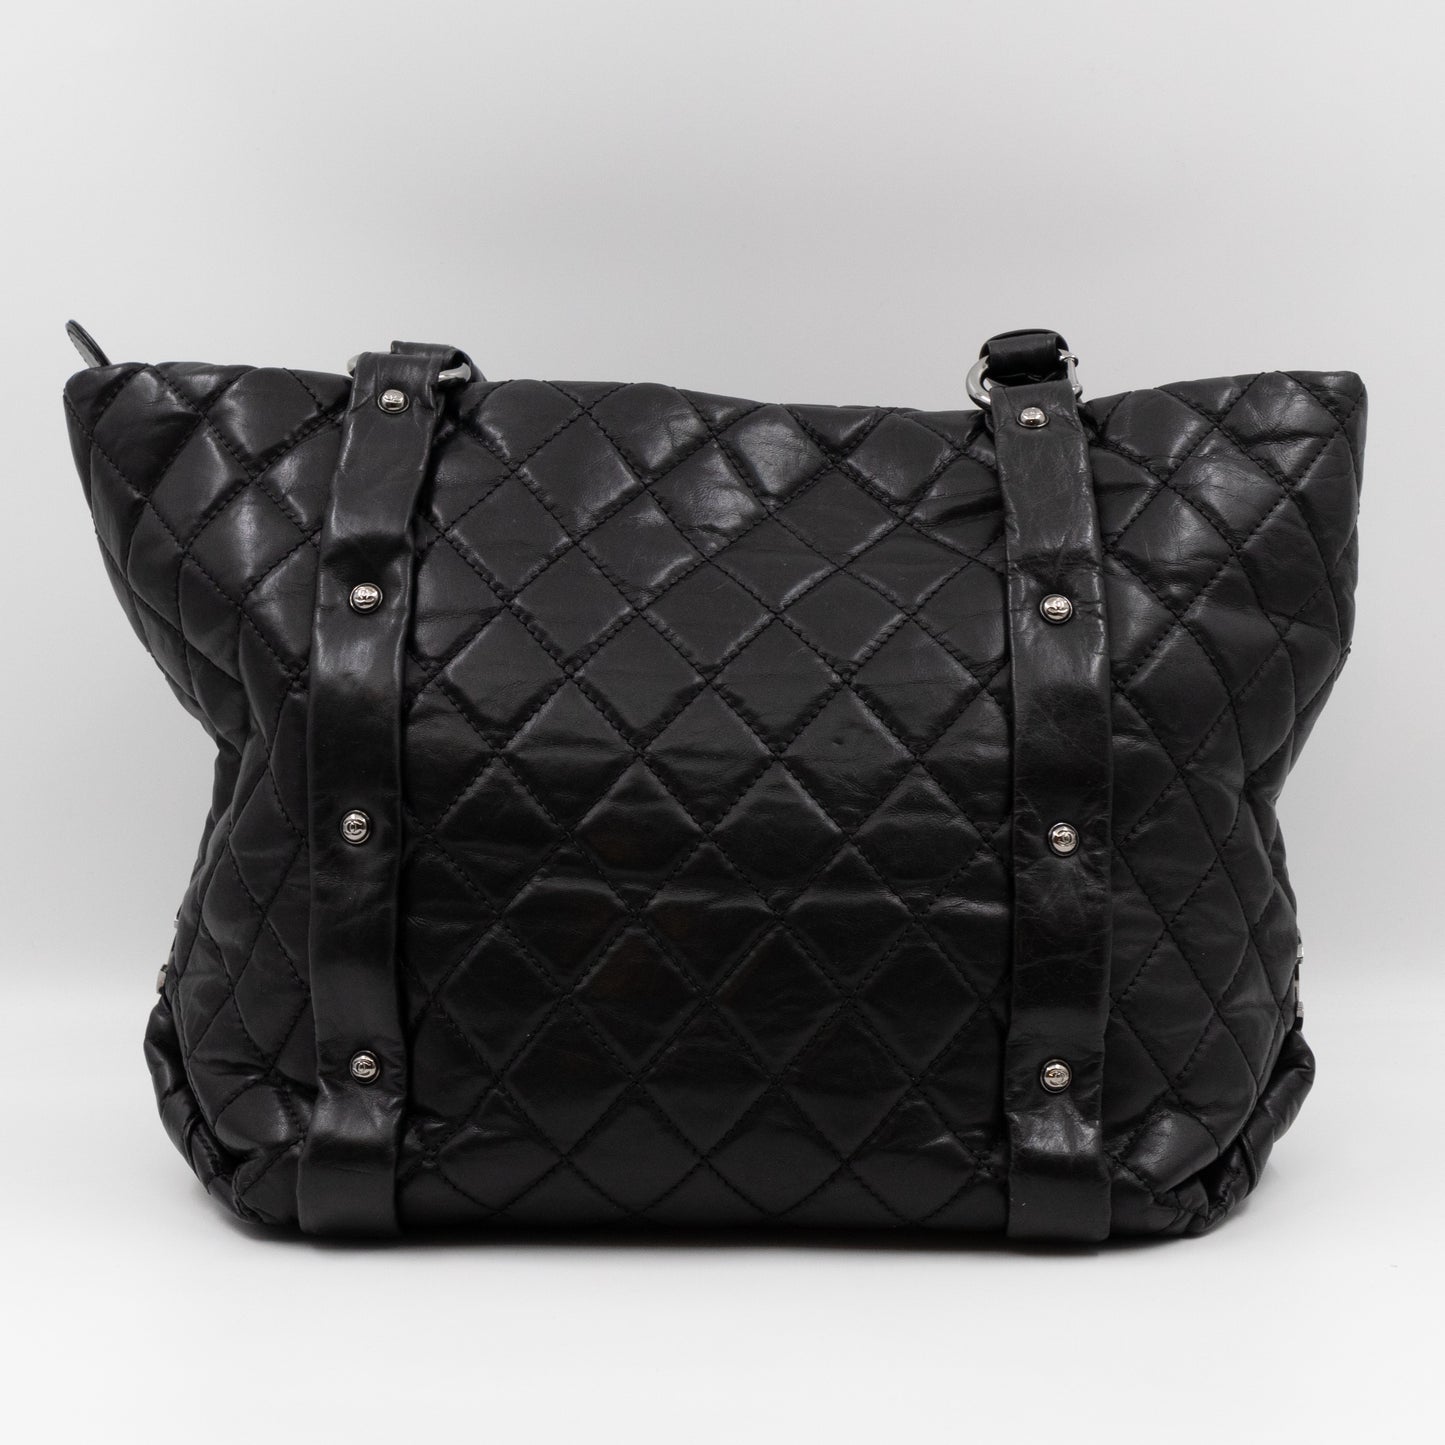 Lady Braid Shopping Tote Black Leather